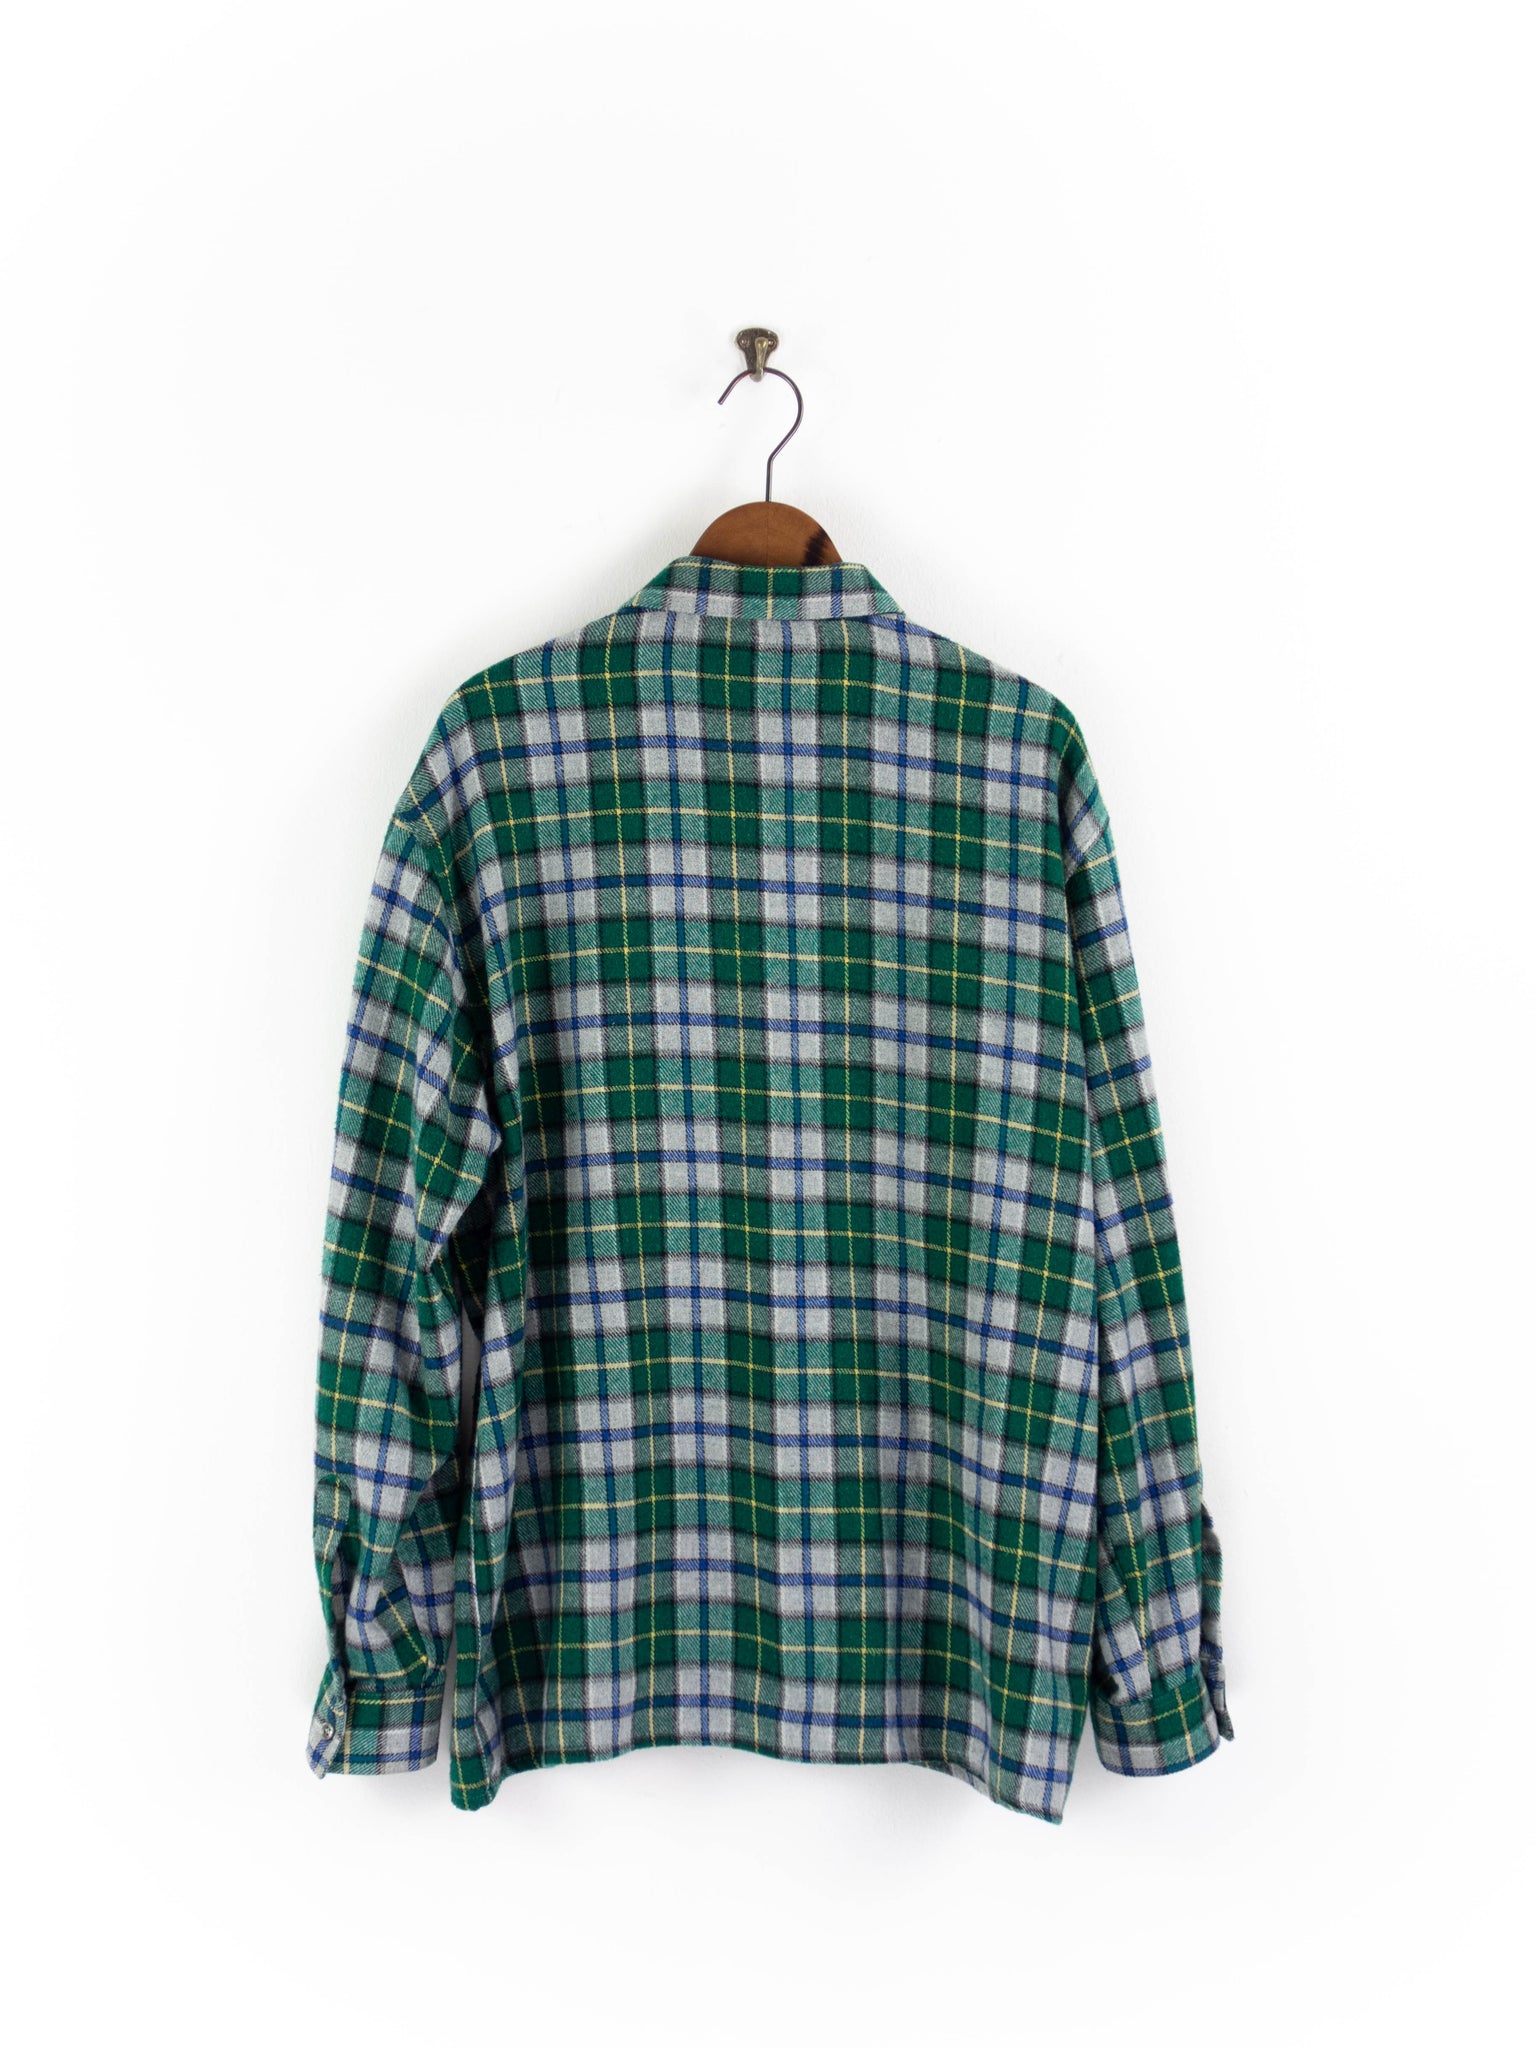 Flannel shirt XL